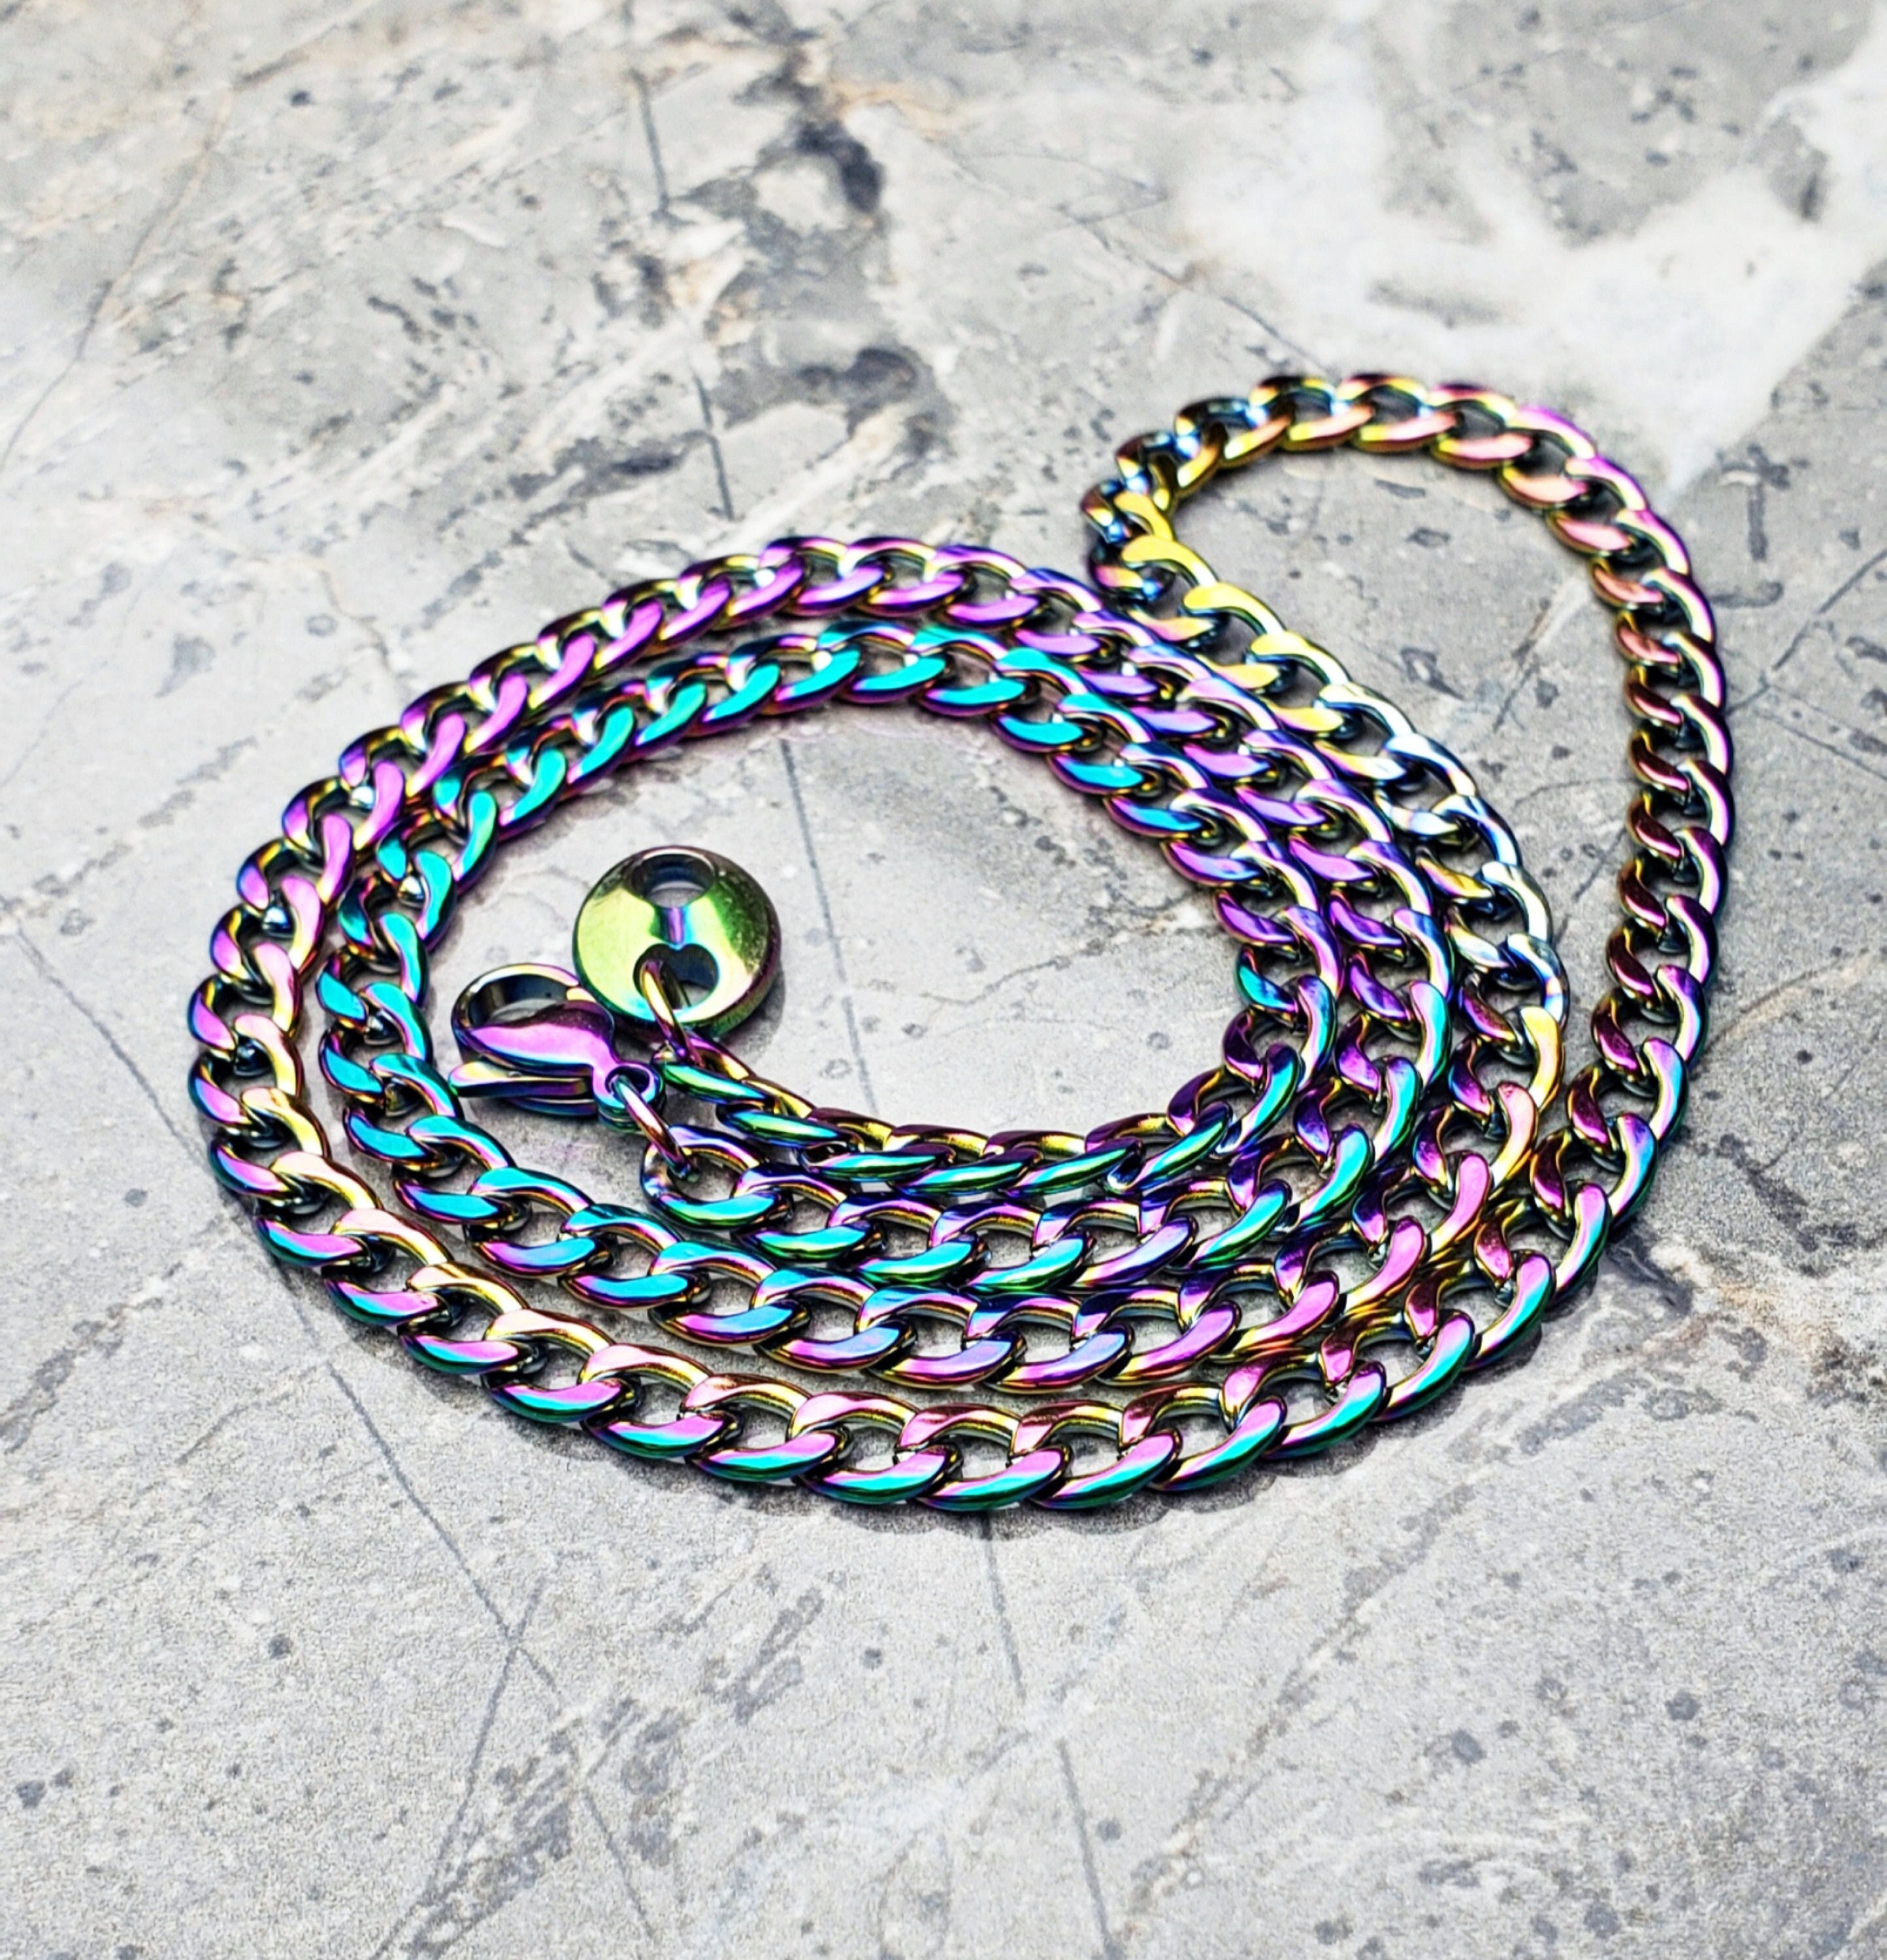 2 FT Rainbow Chain BULK Chain for Jewelry Making Cross Stainless